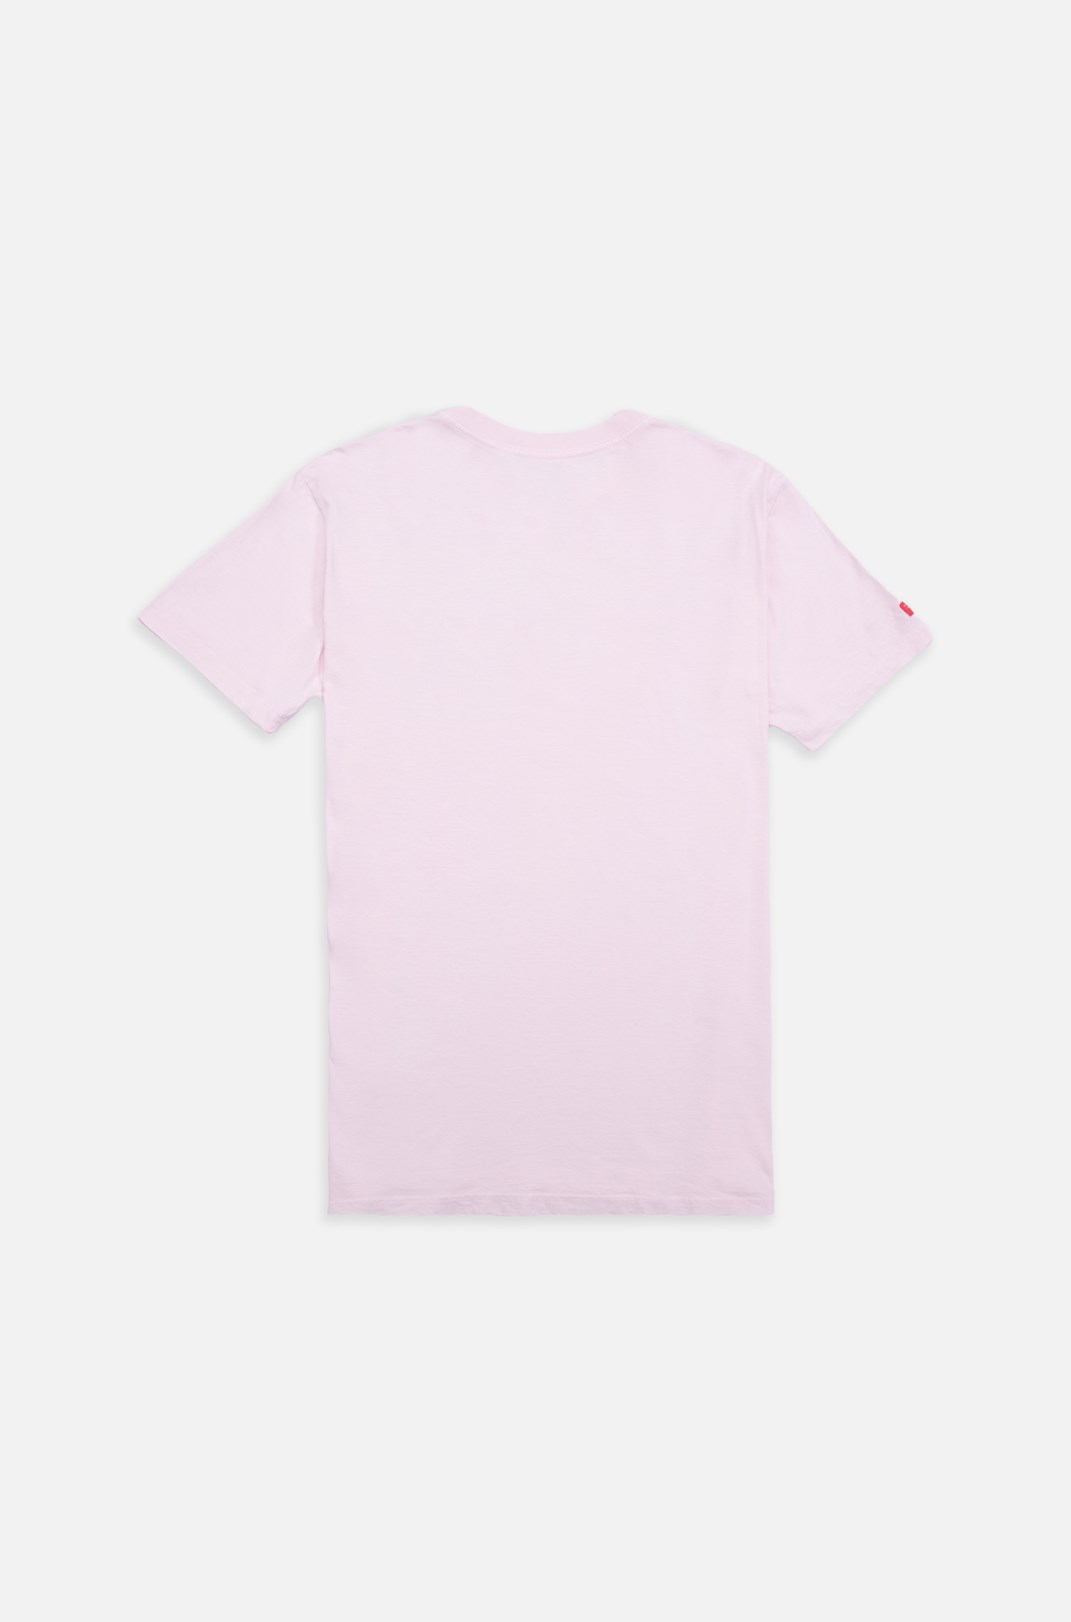 Camiseta Tradicional Approve New Classic Rosa e Branca